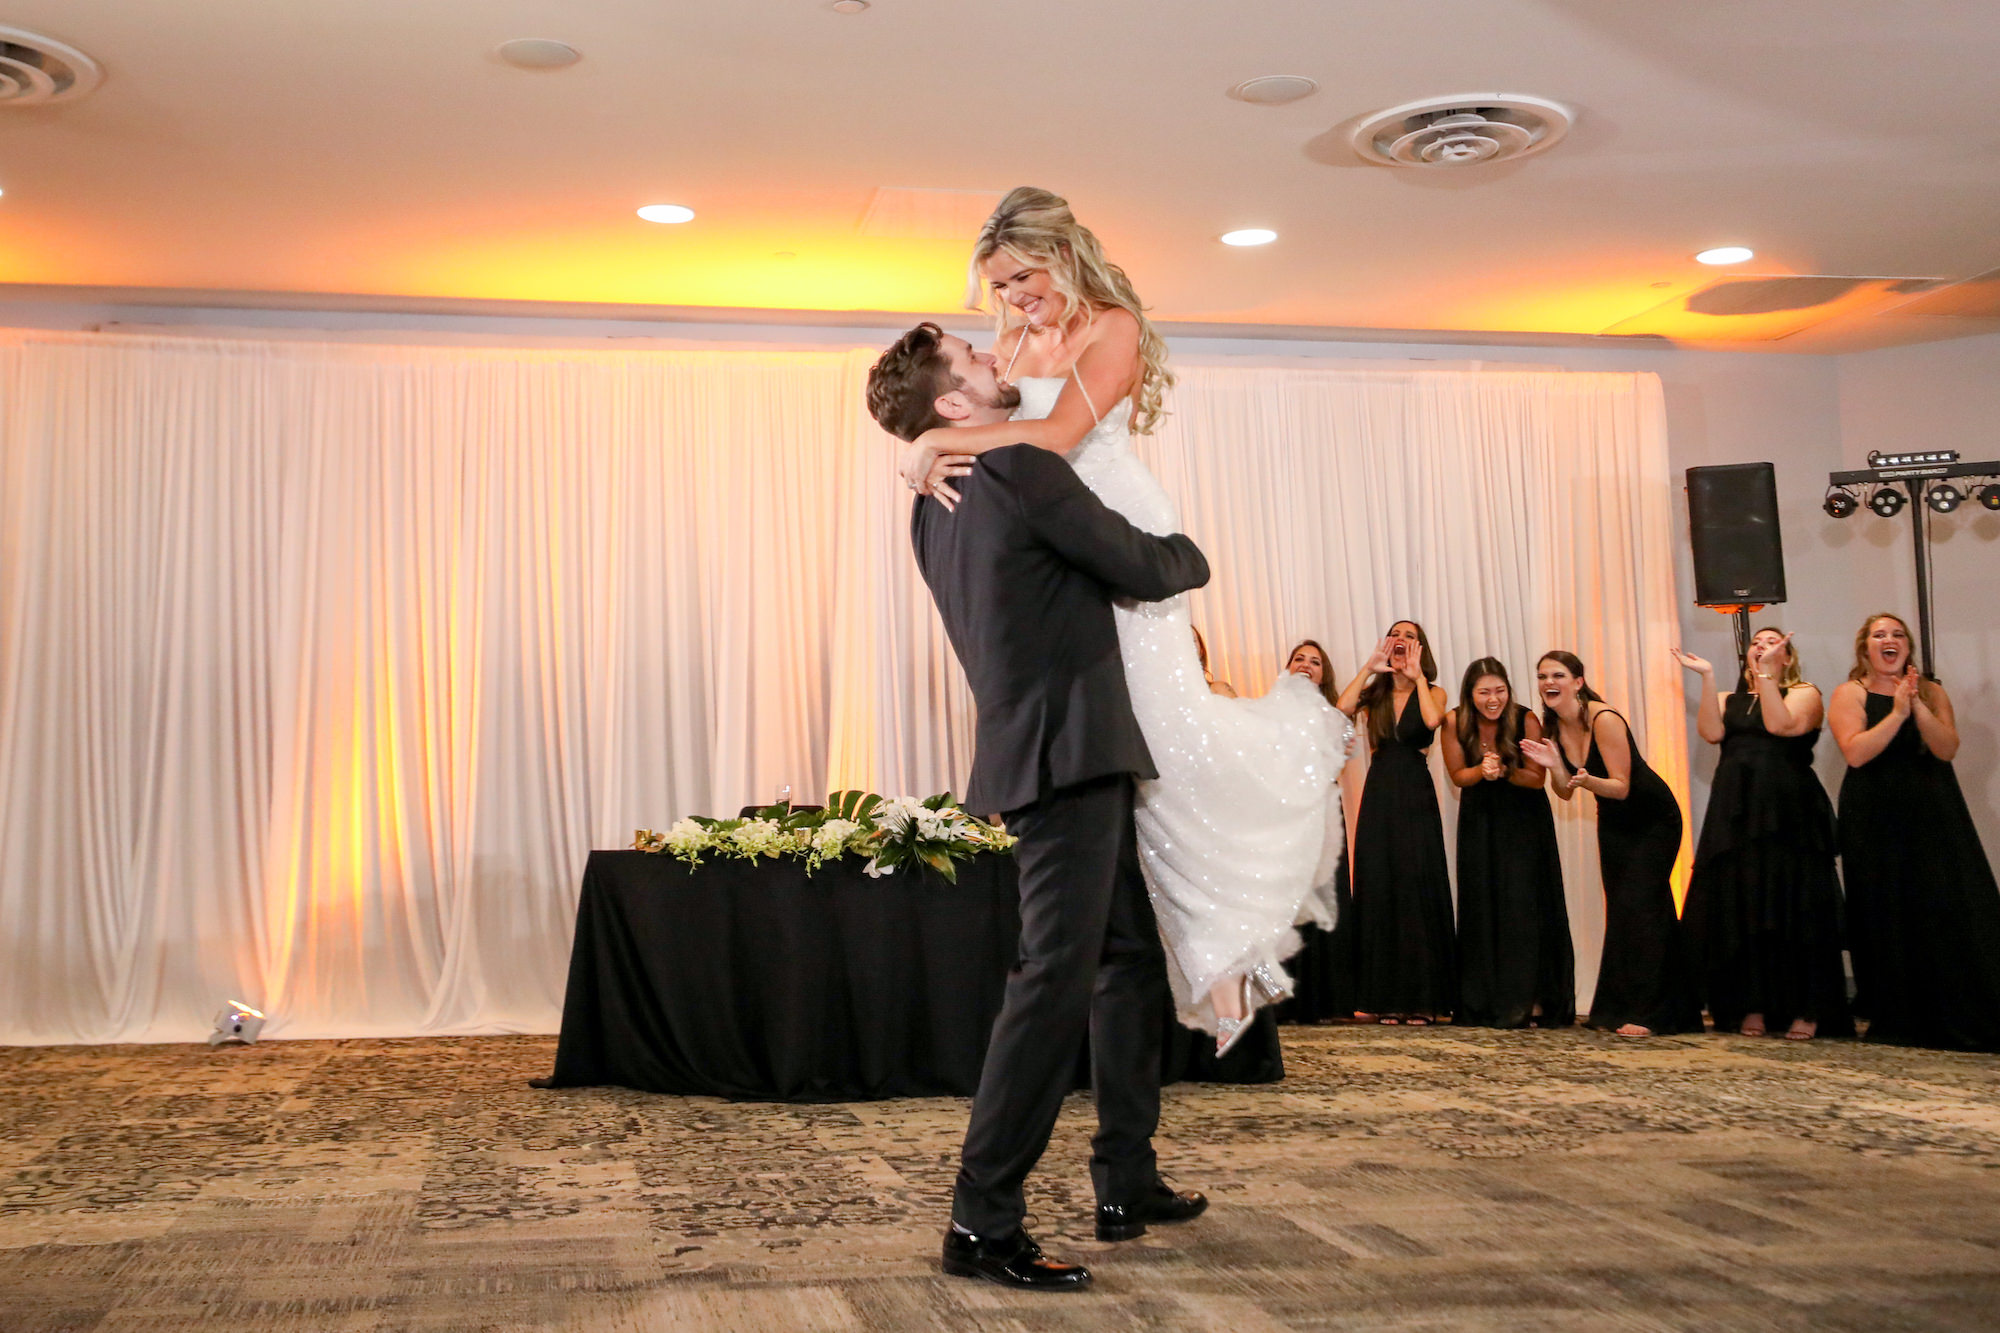 Bride and Groom First Dance | Tampa DJ Grant Hemond & Associates